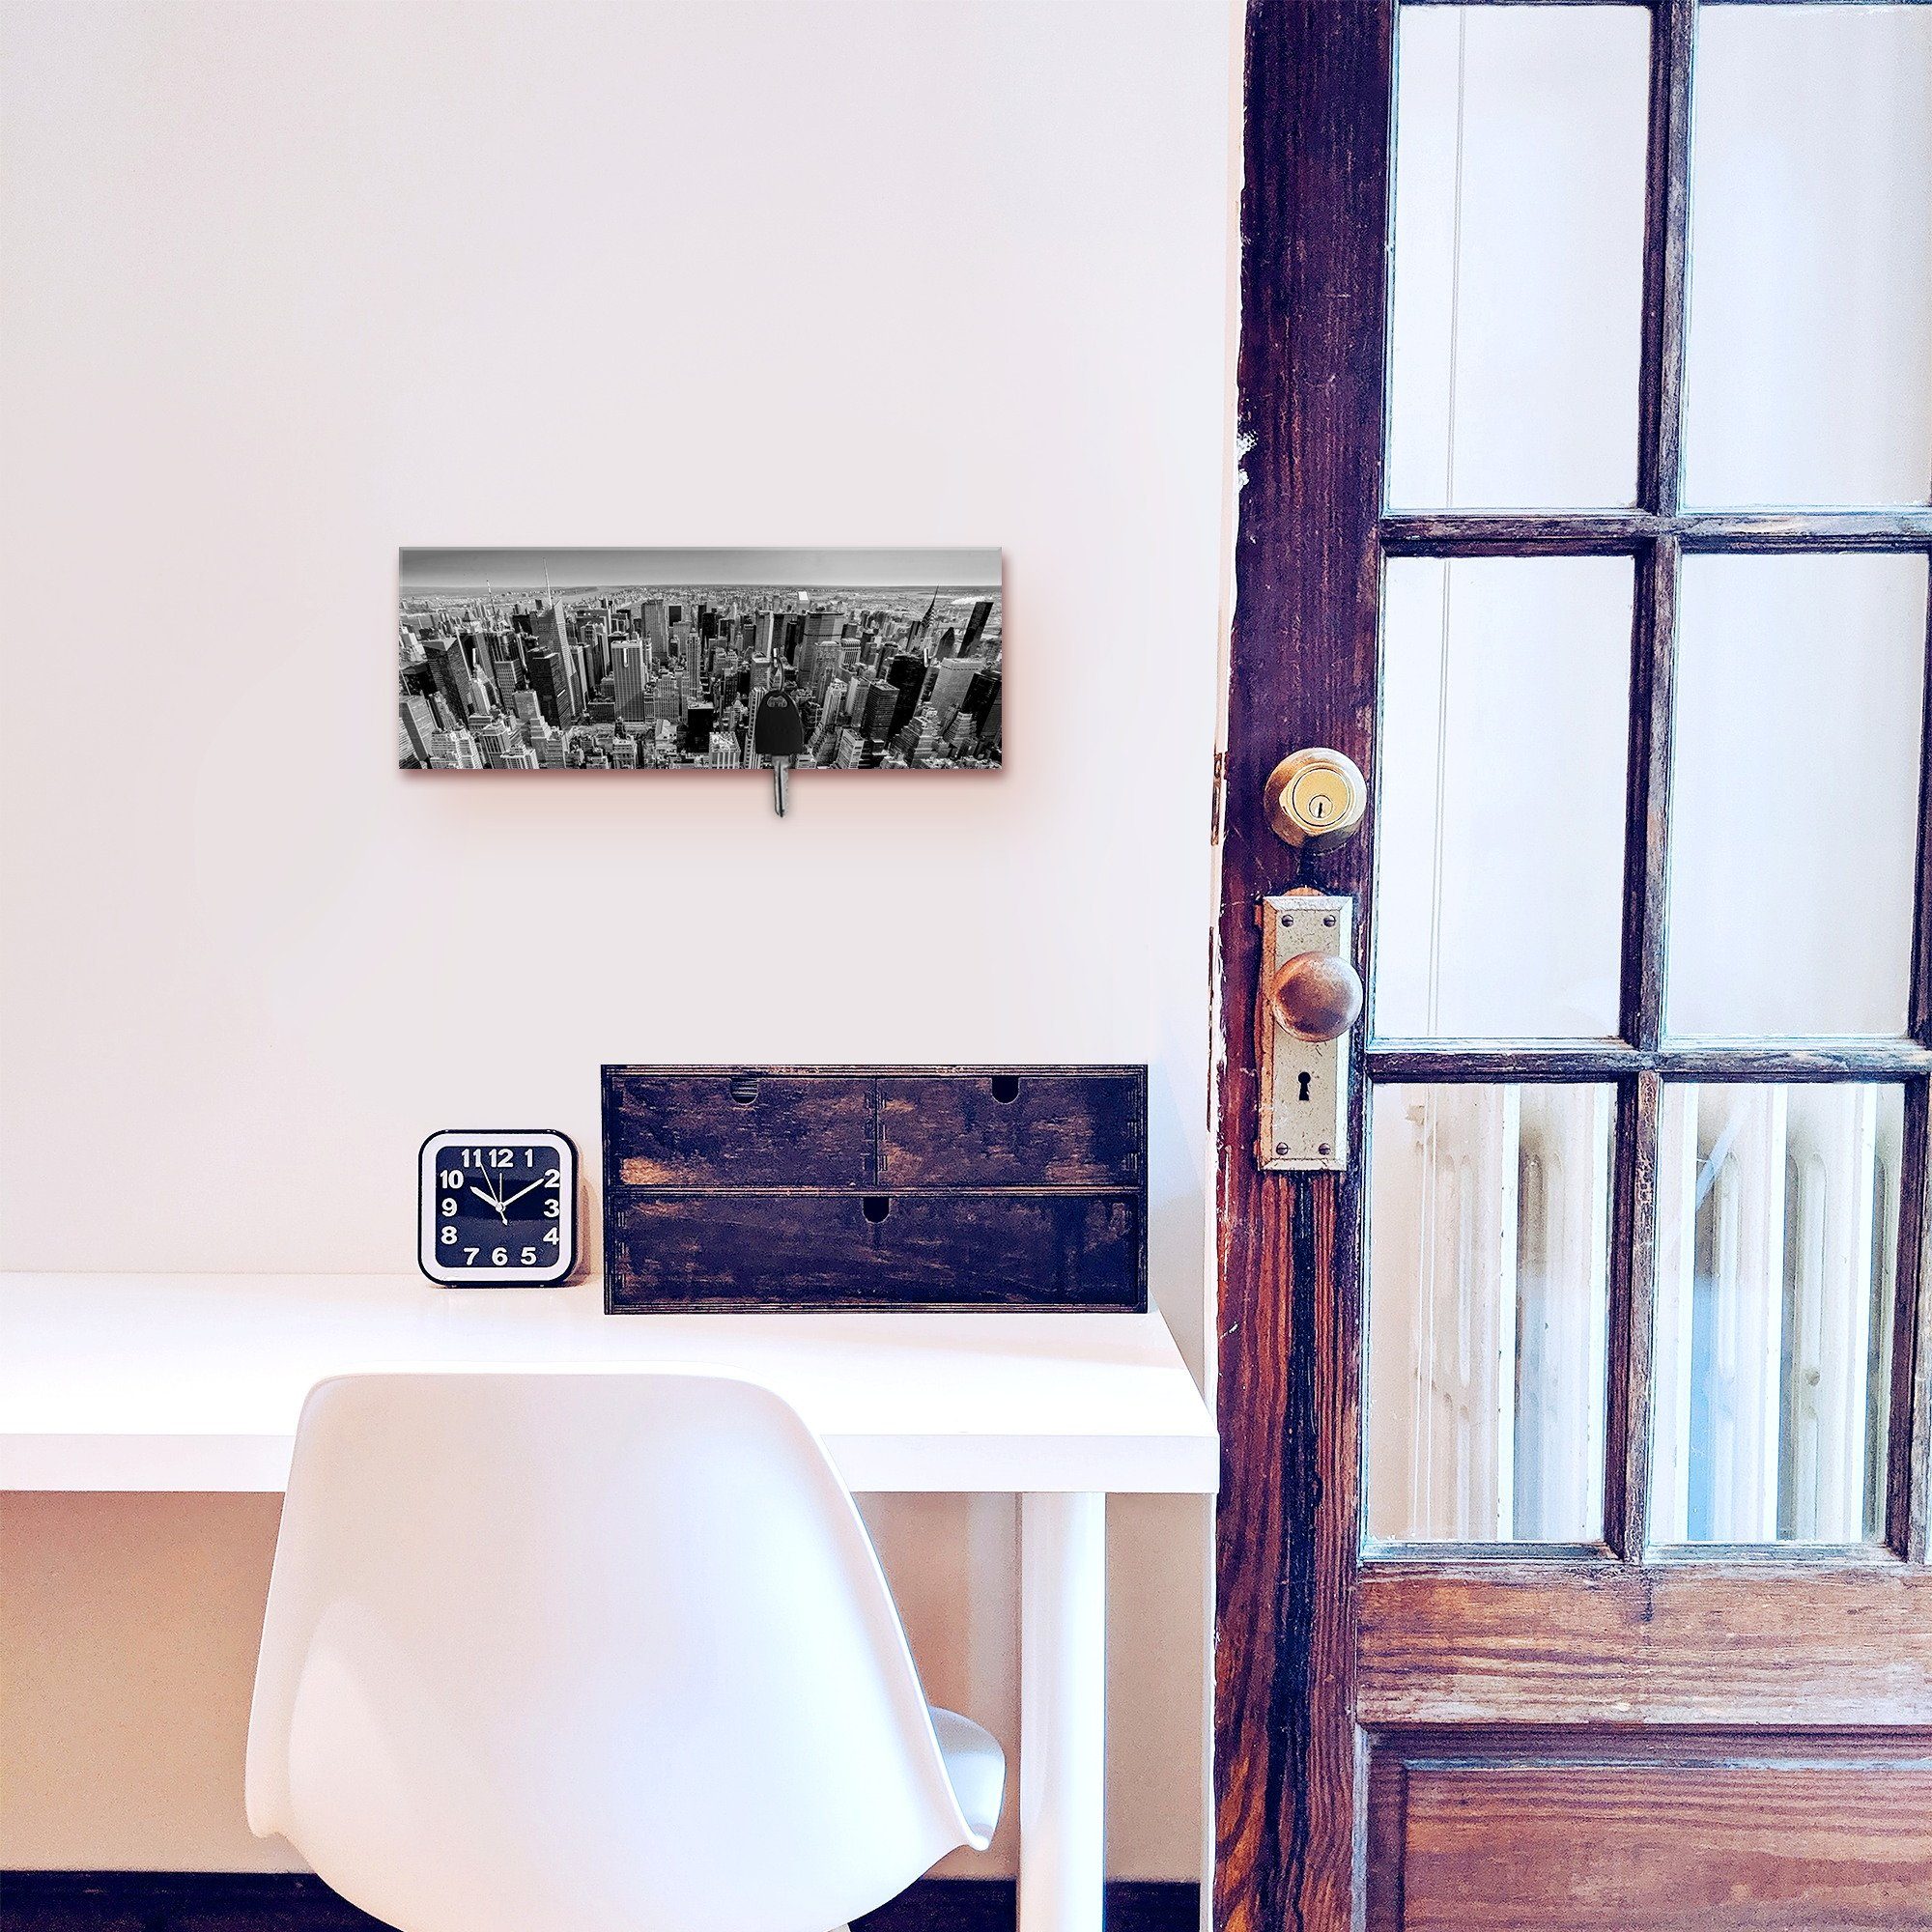 Artland Sleutelbord Luftbild van Manhattan New York City VS van hout met 4 sleutelhaakjes – sleutelbord, sleutelborden, sleutelhouder, sleutelhanger voor de hal – stijl: modern